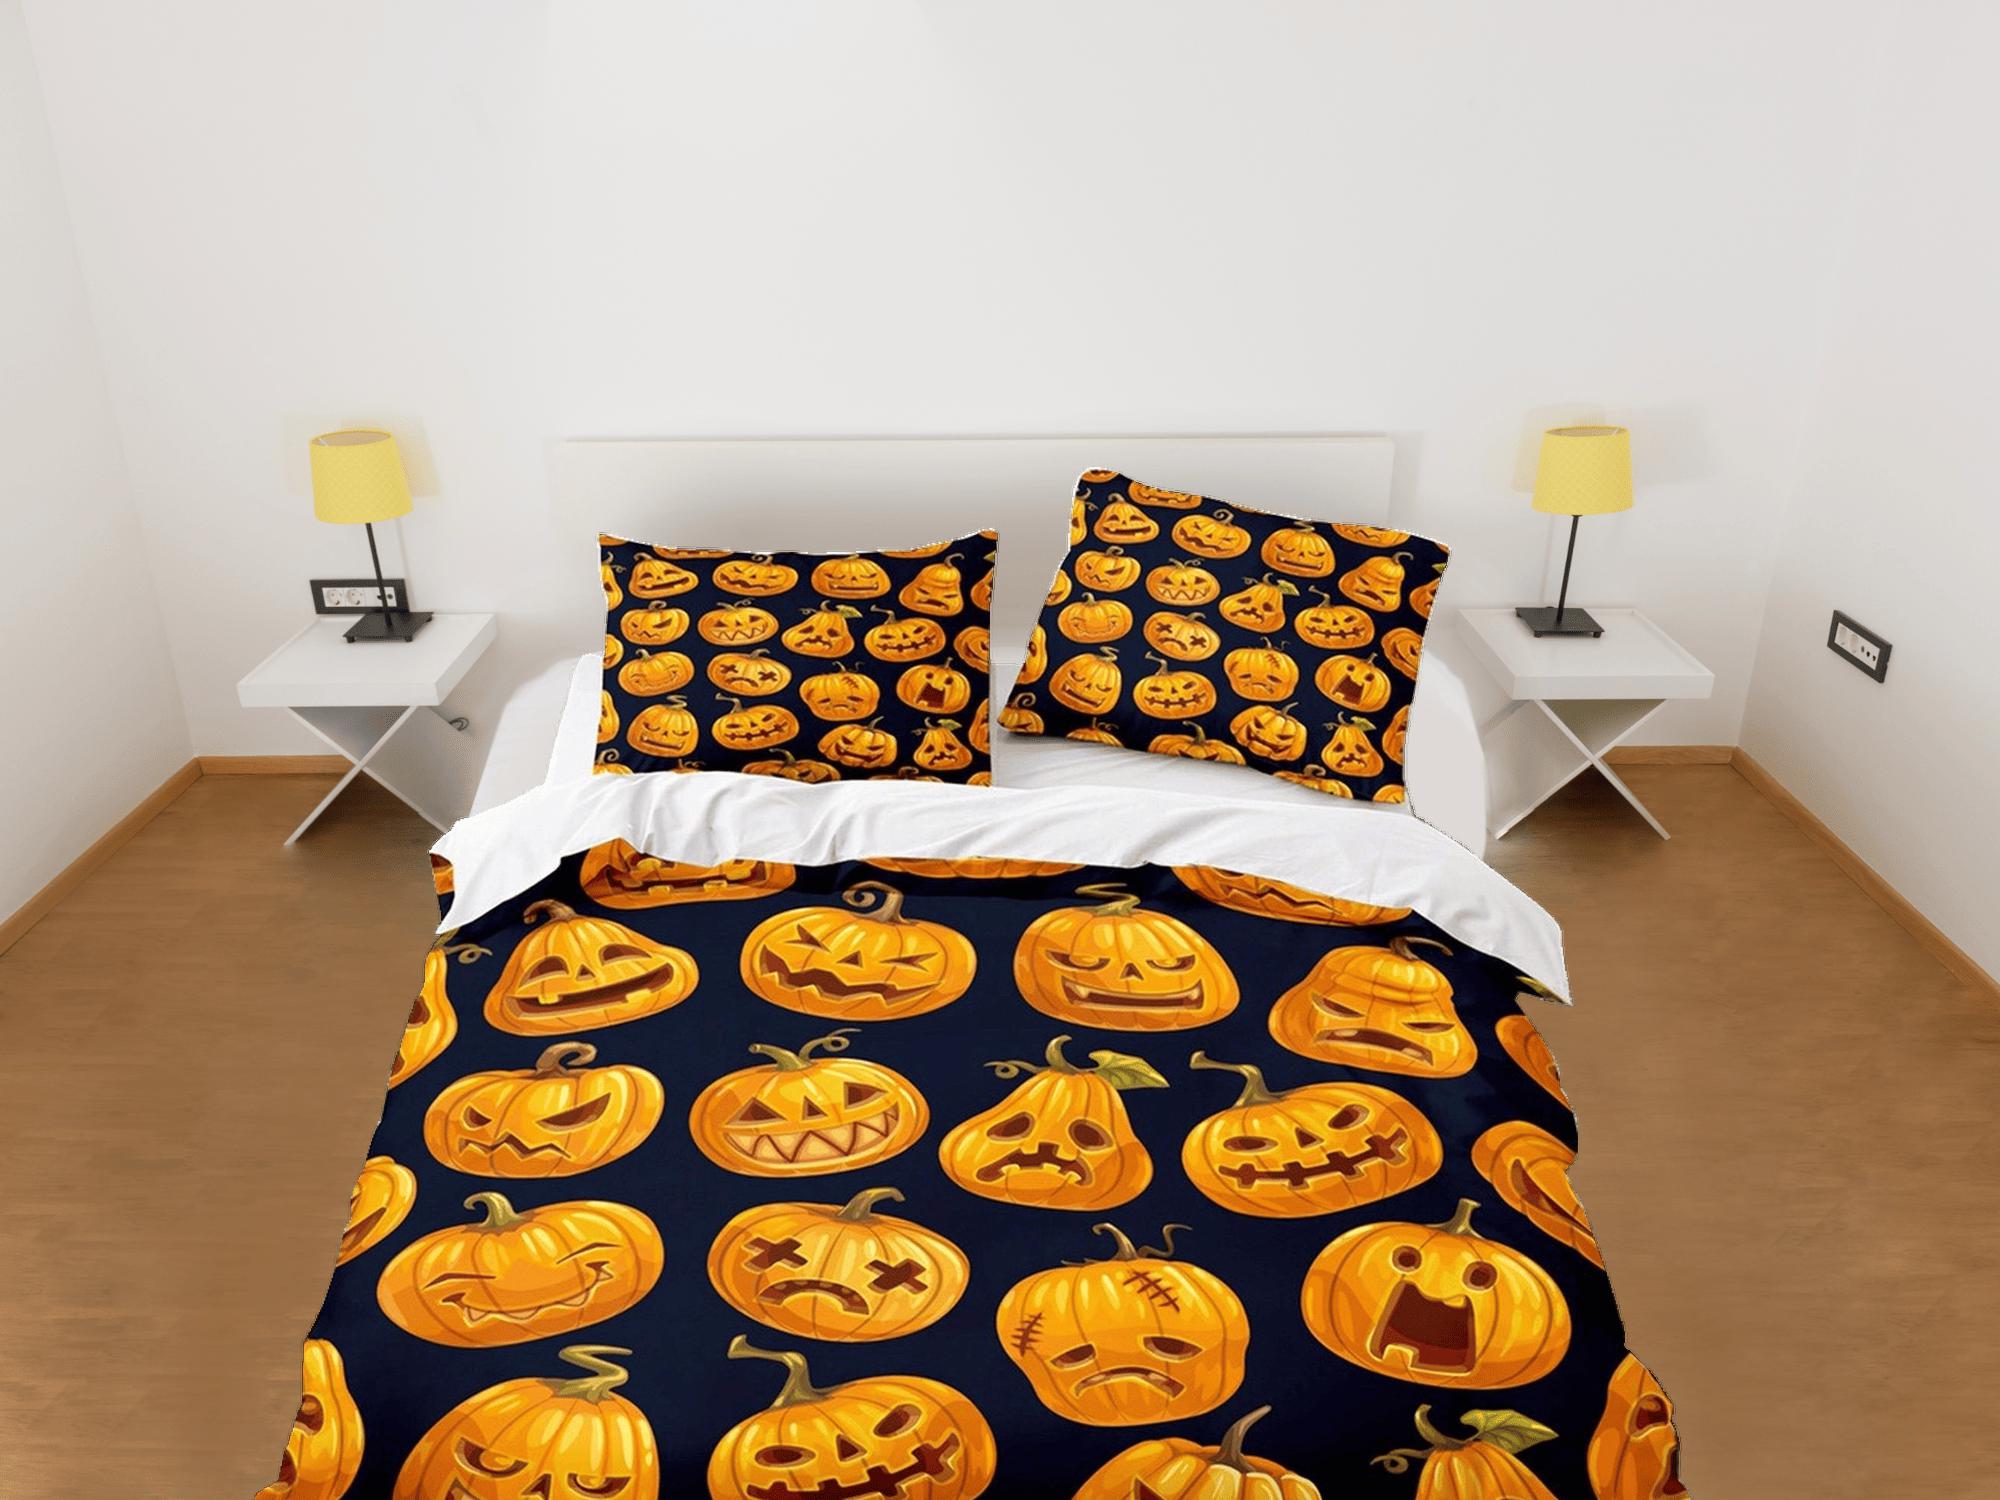 daintyduvet Various facial expressions of pumpkins halloween bedding & pillowcase, duvet cover dorm bedding, nursery toddler bedding, halloween gift